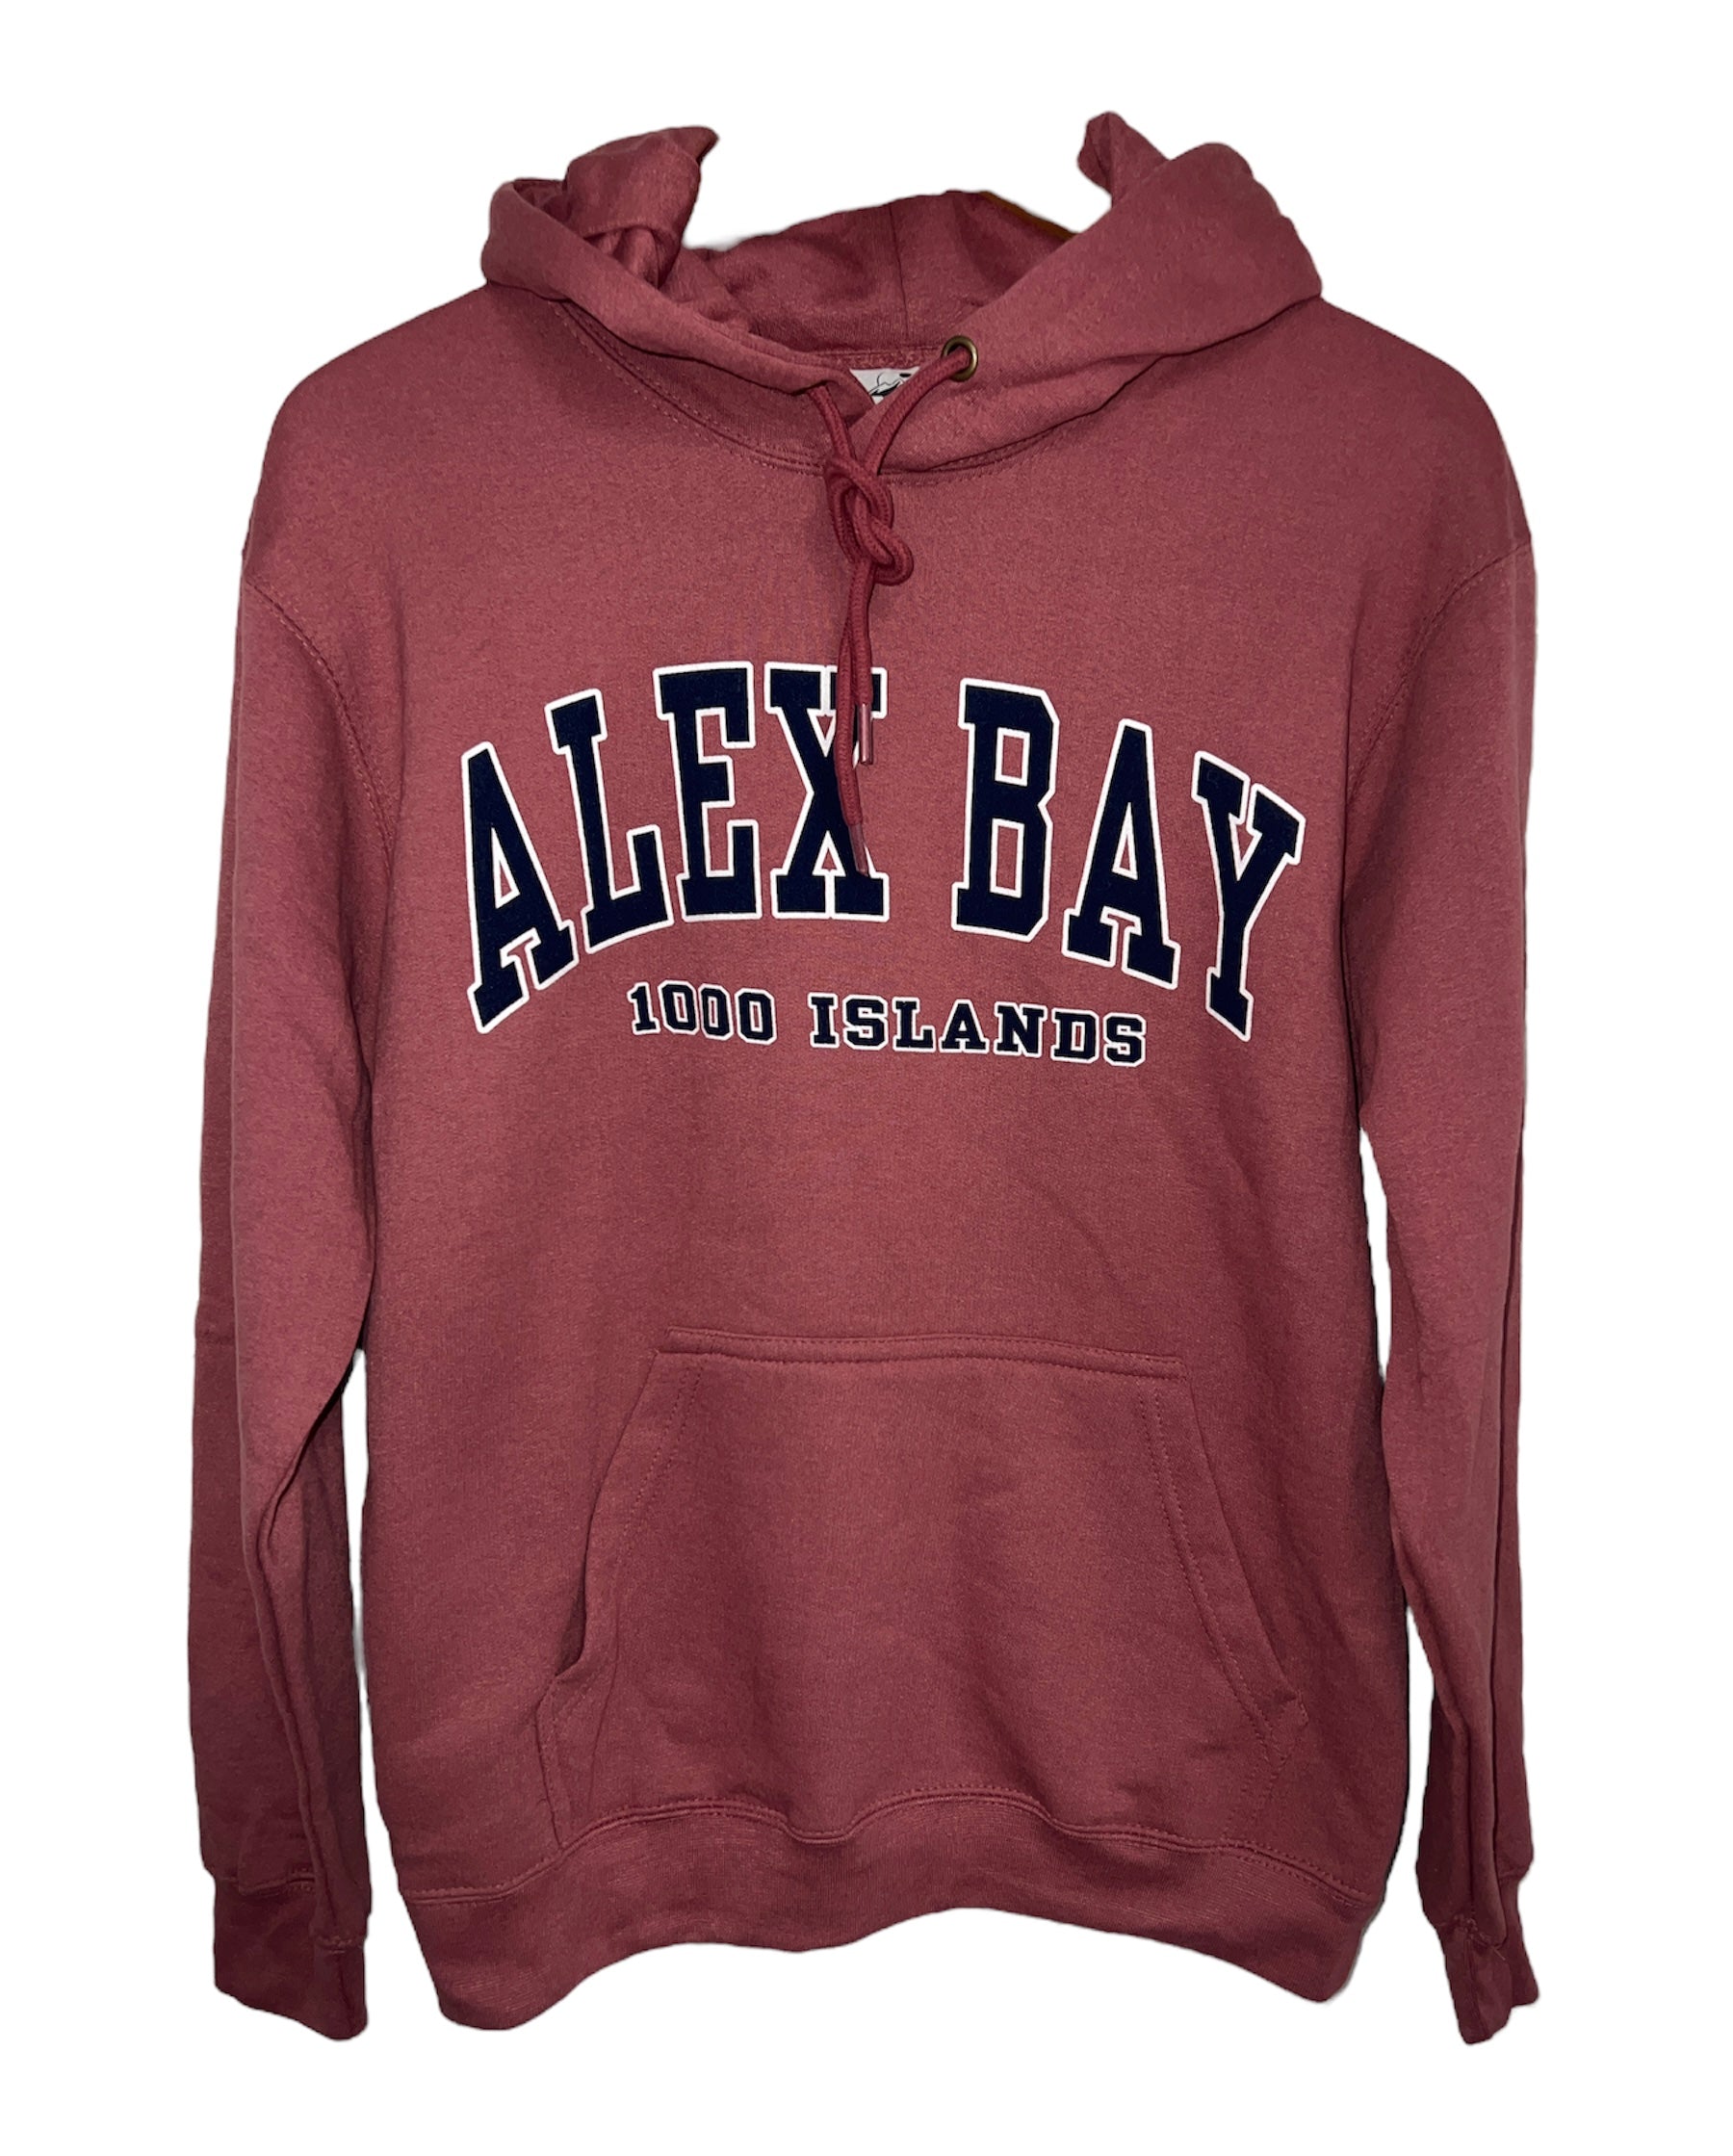 Alex Bay 1000 Islands Hoodie Red – Good Dog Charlies